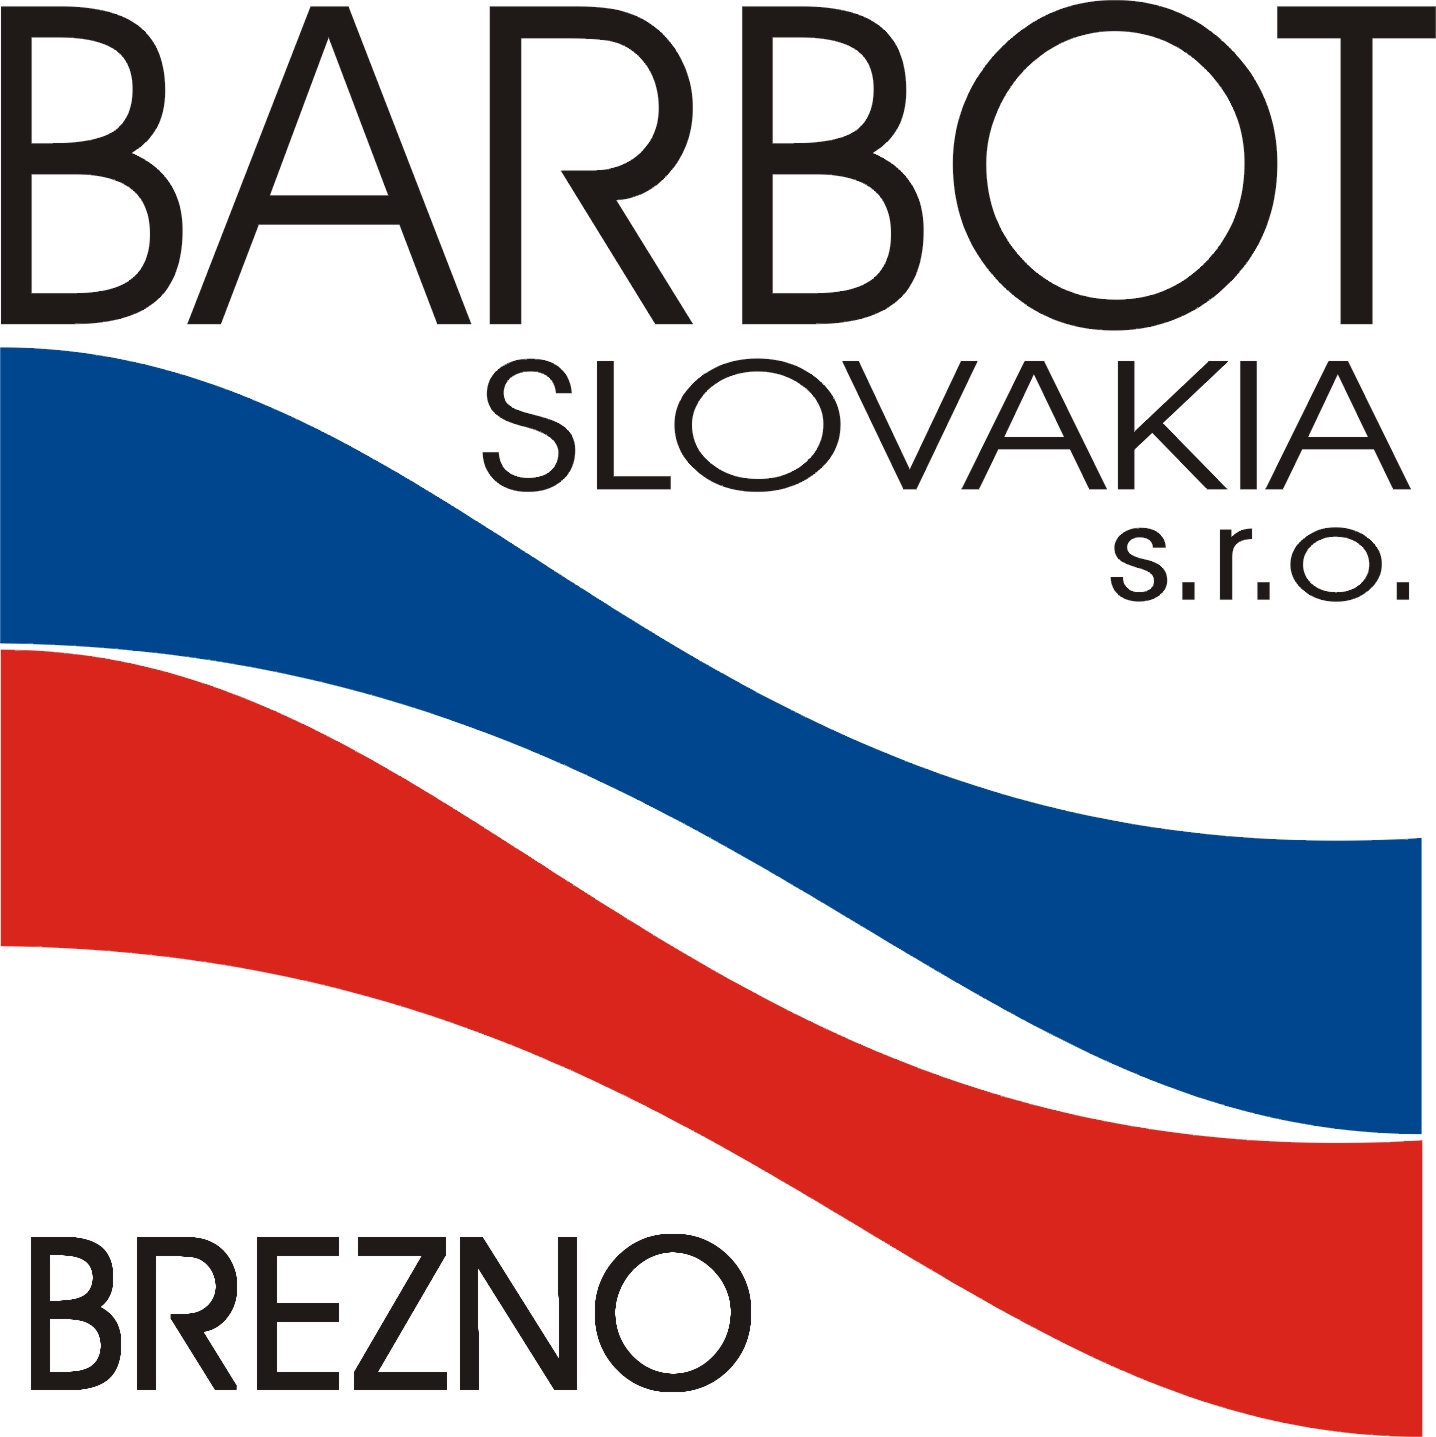 Barbot slovakia